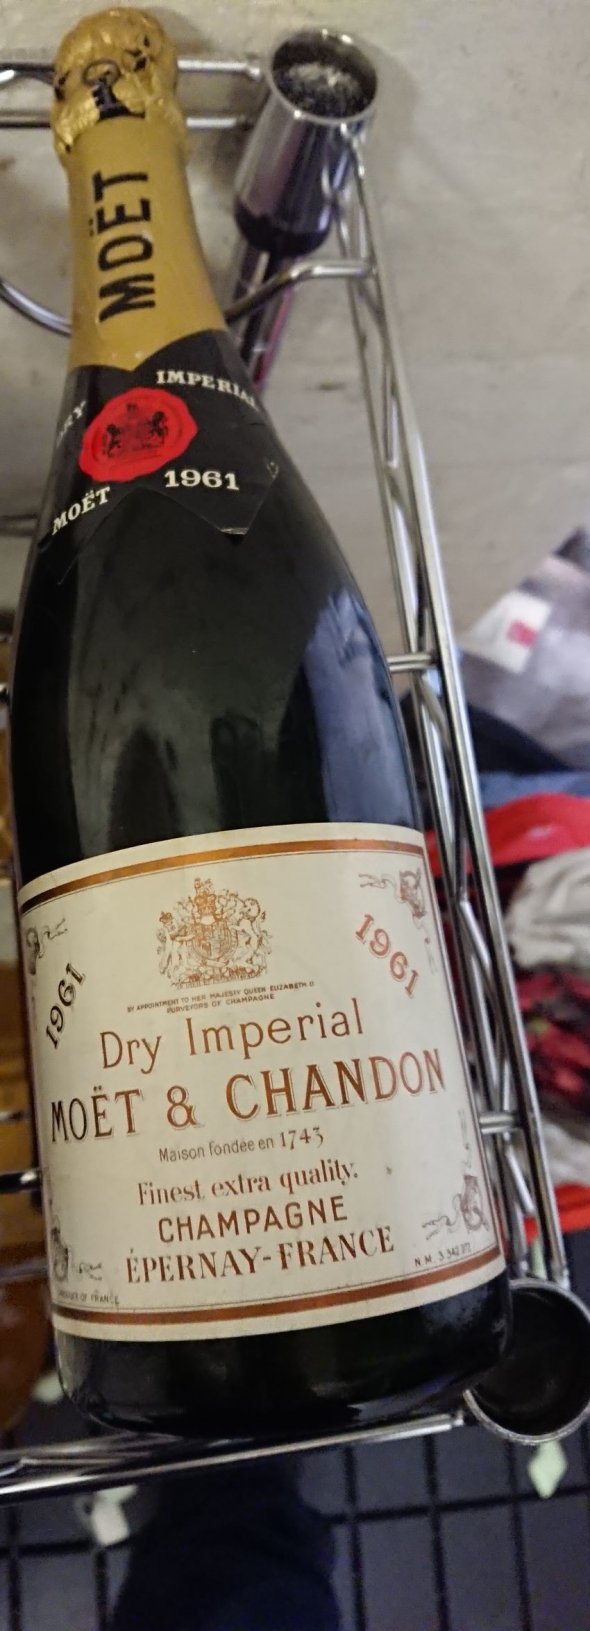 Moet & Chandon, Brut Imperial, Champagne, France, AOC 1961